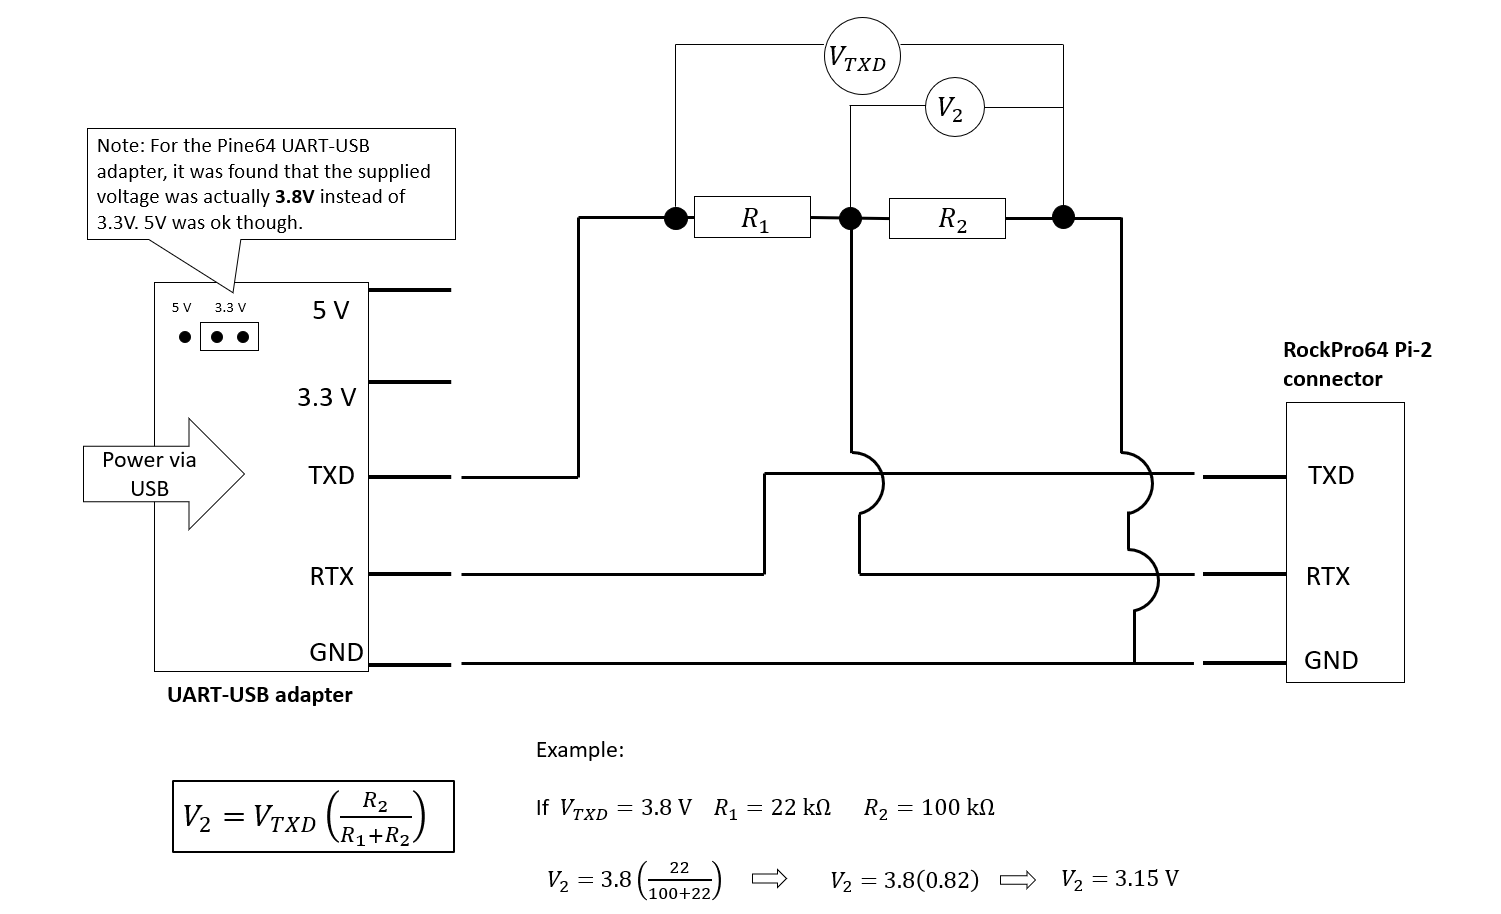 Figure 2: Schematic of voltage decrease for Pine64 USB-UART adapter